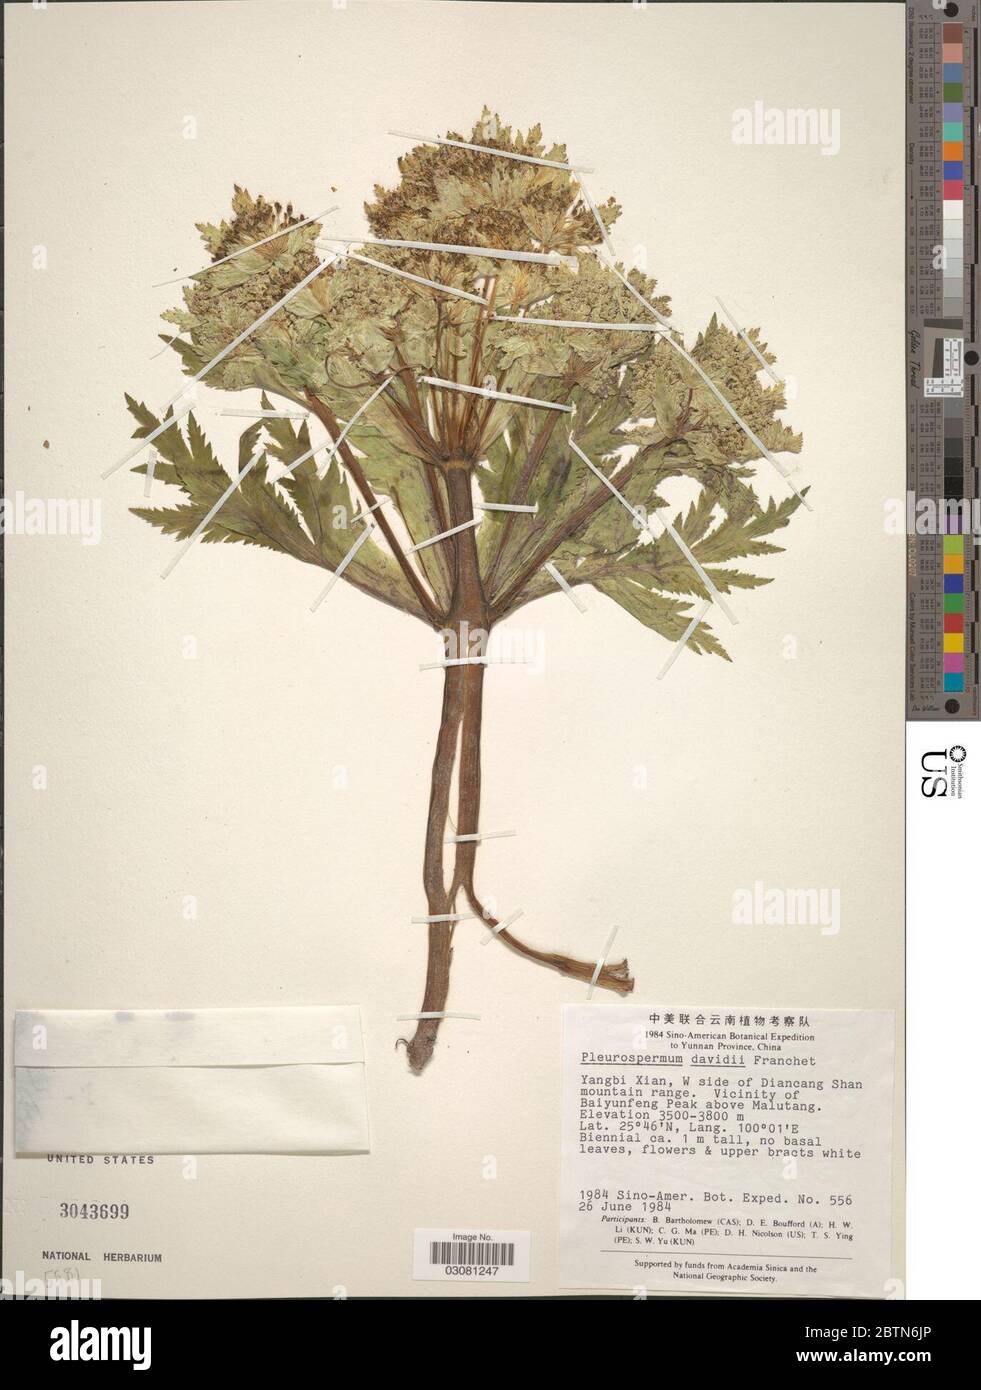 Pleurospermum davidii Franch. 4 Feb 20191 Stock Photo